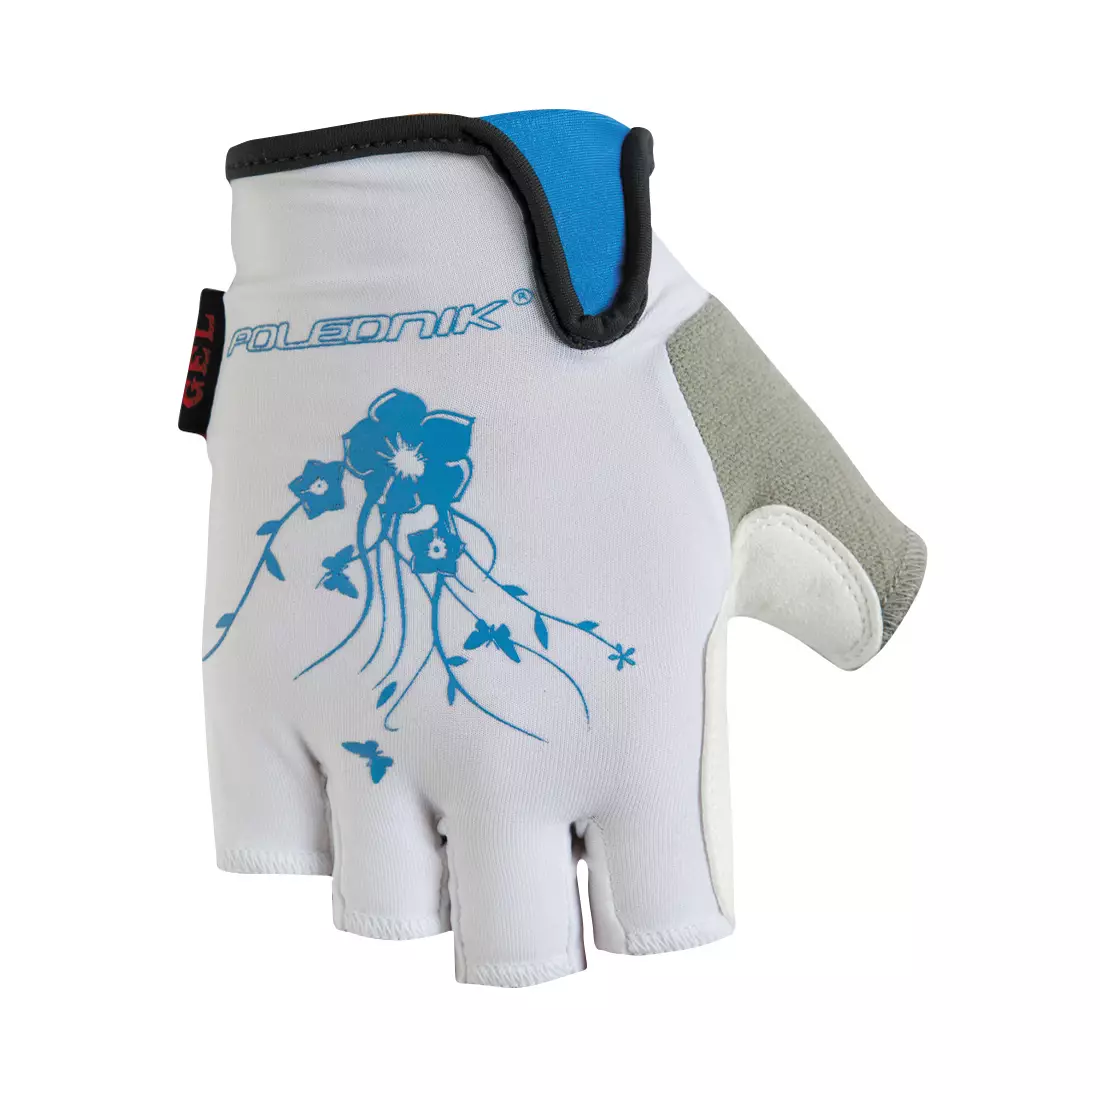 POLEDNIK MYSTIQUE - women's cycling gloves